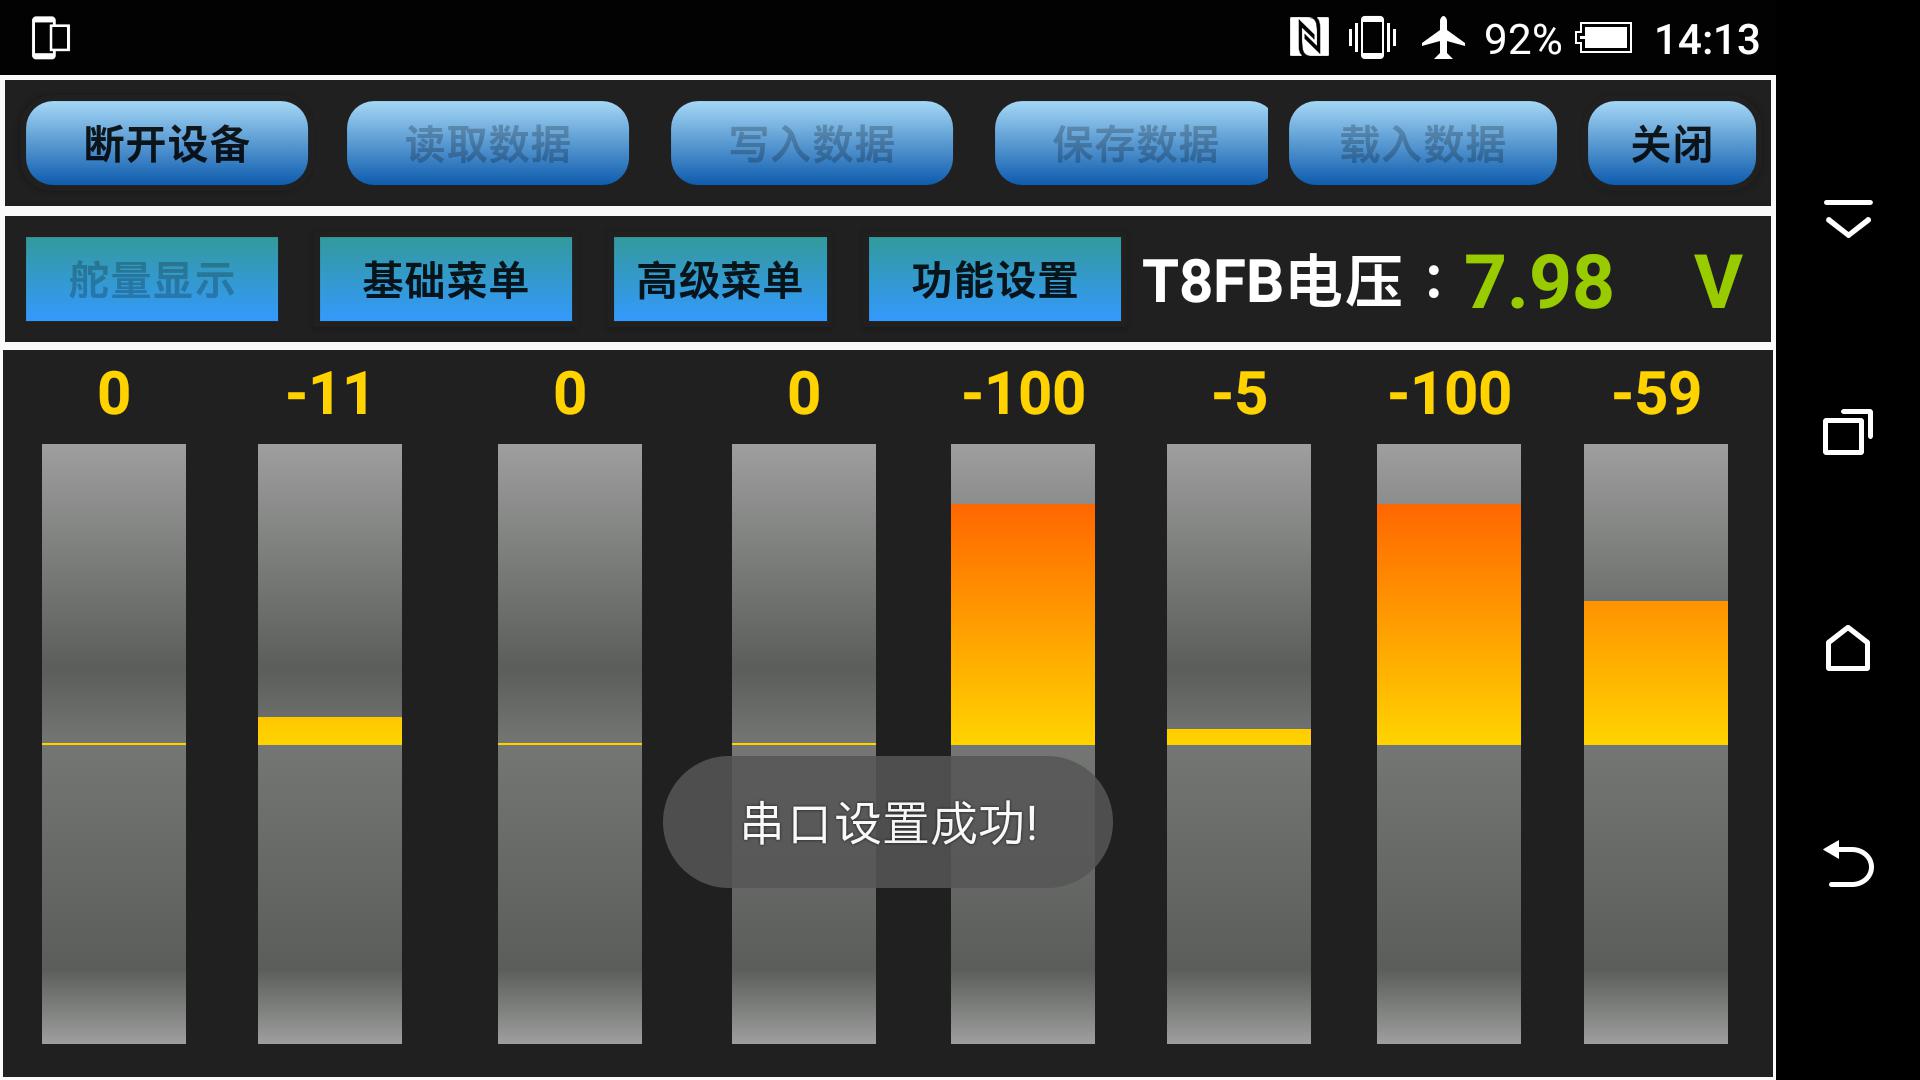 T8FB手机app调试方法步骤 电池,遥控器,固件 作者:乐迪support 5095 